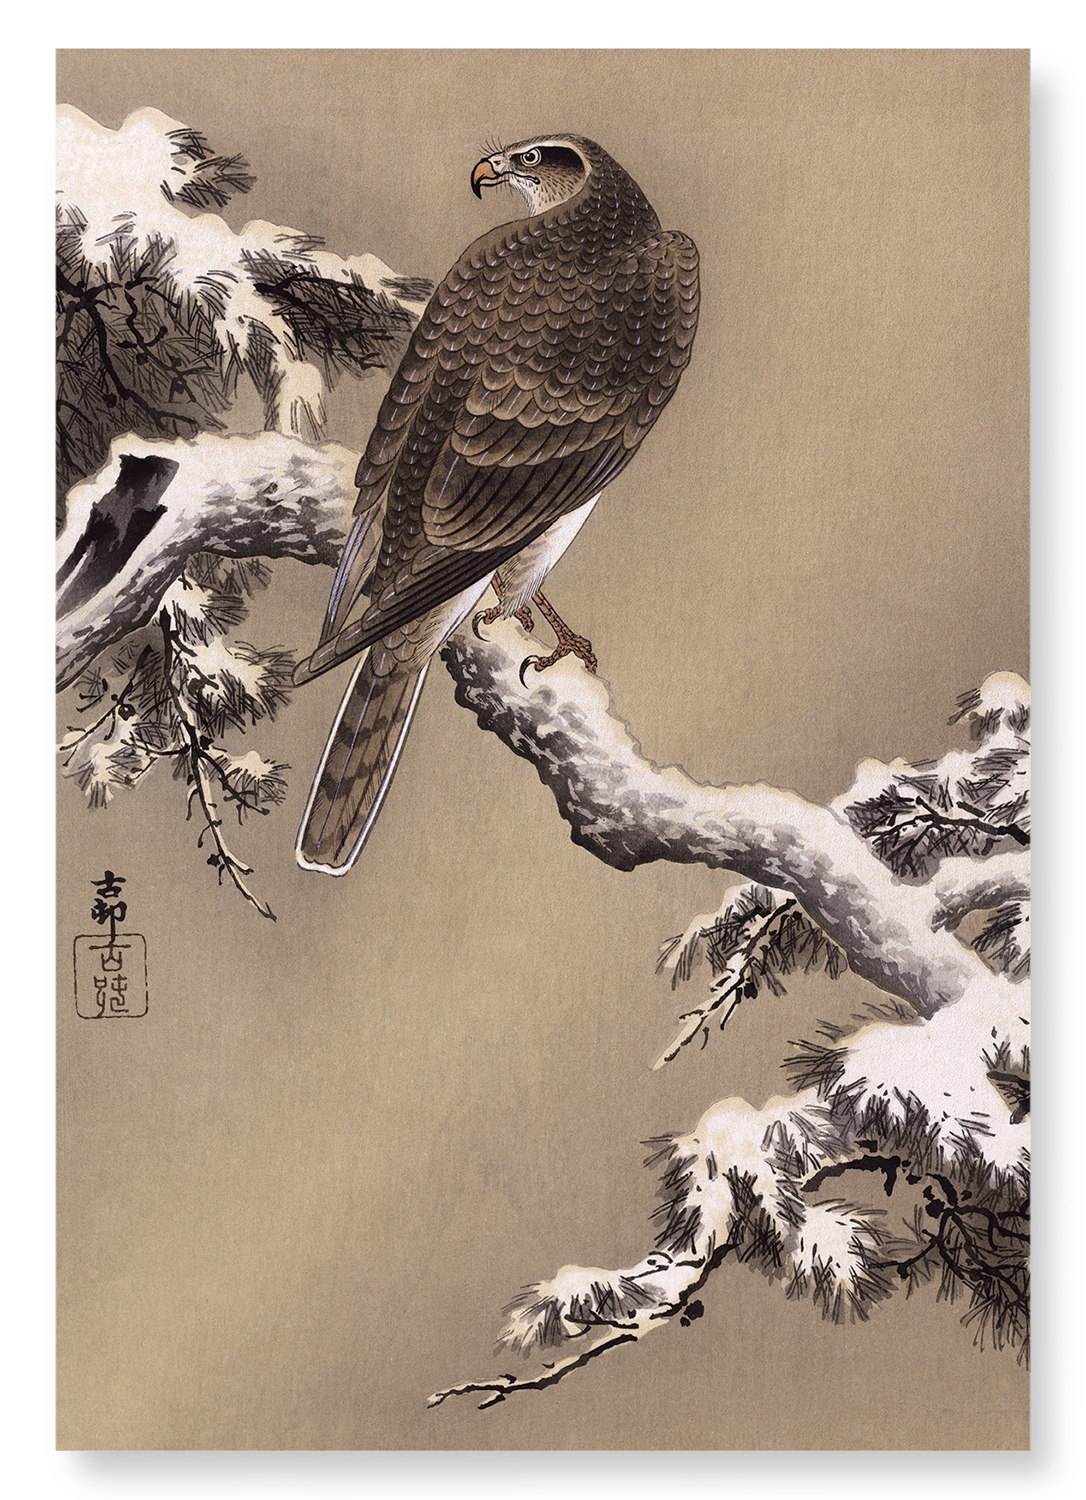 EAGLE AND PINE TREE: Japanese Art Print